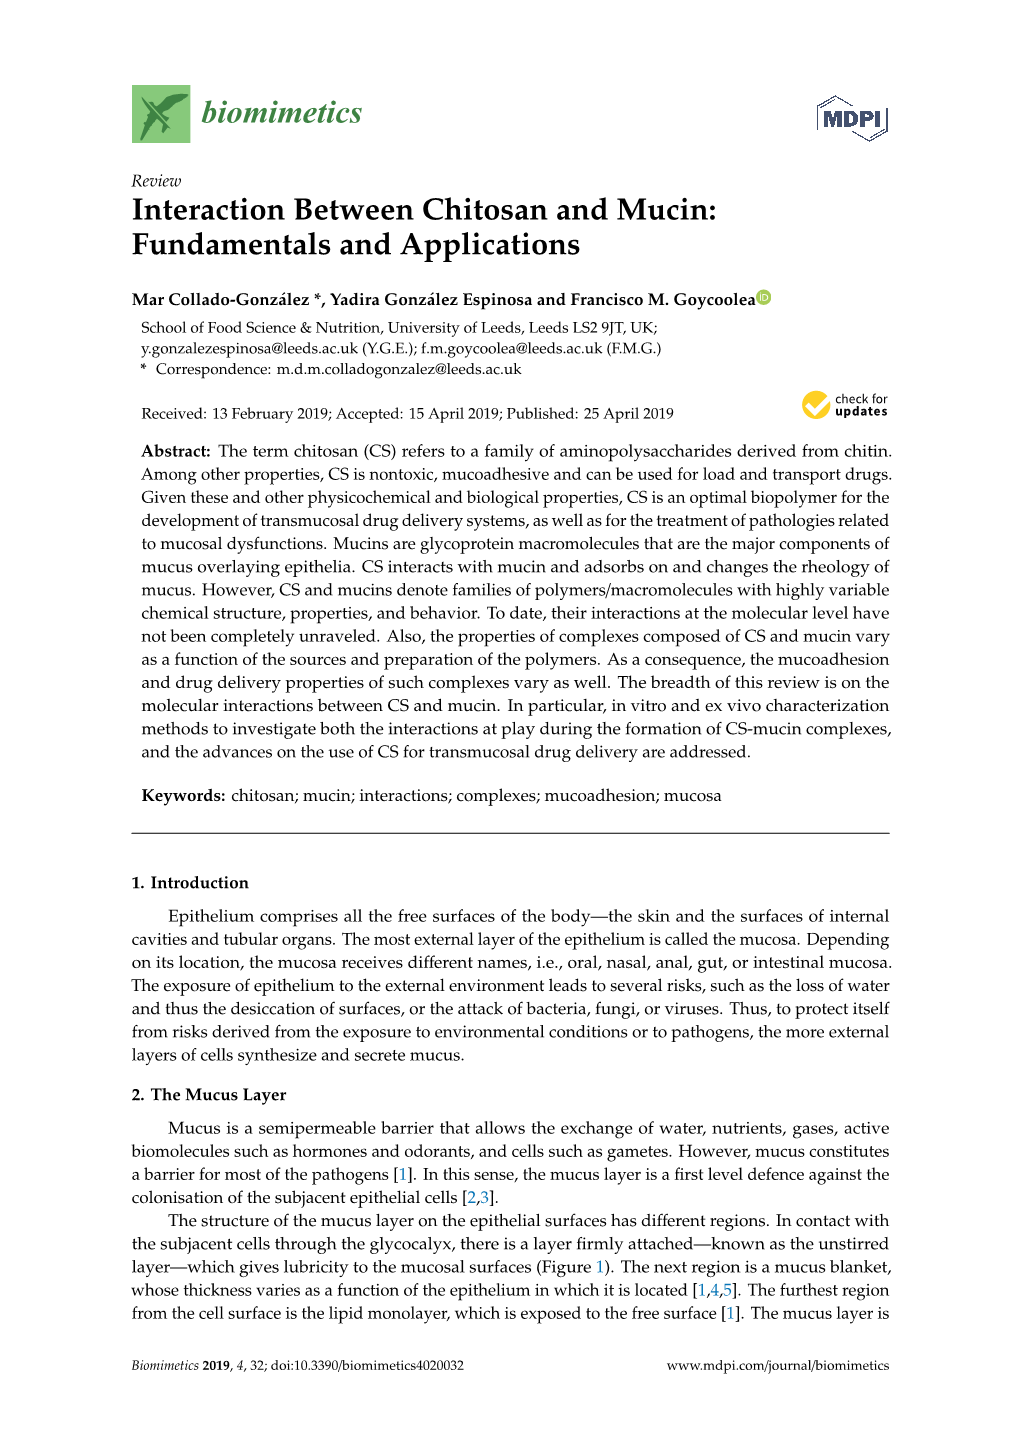 Interaction Between Chitosan and Mucin: Fundamentals and Applications